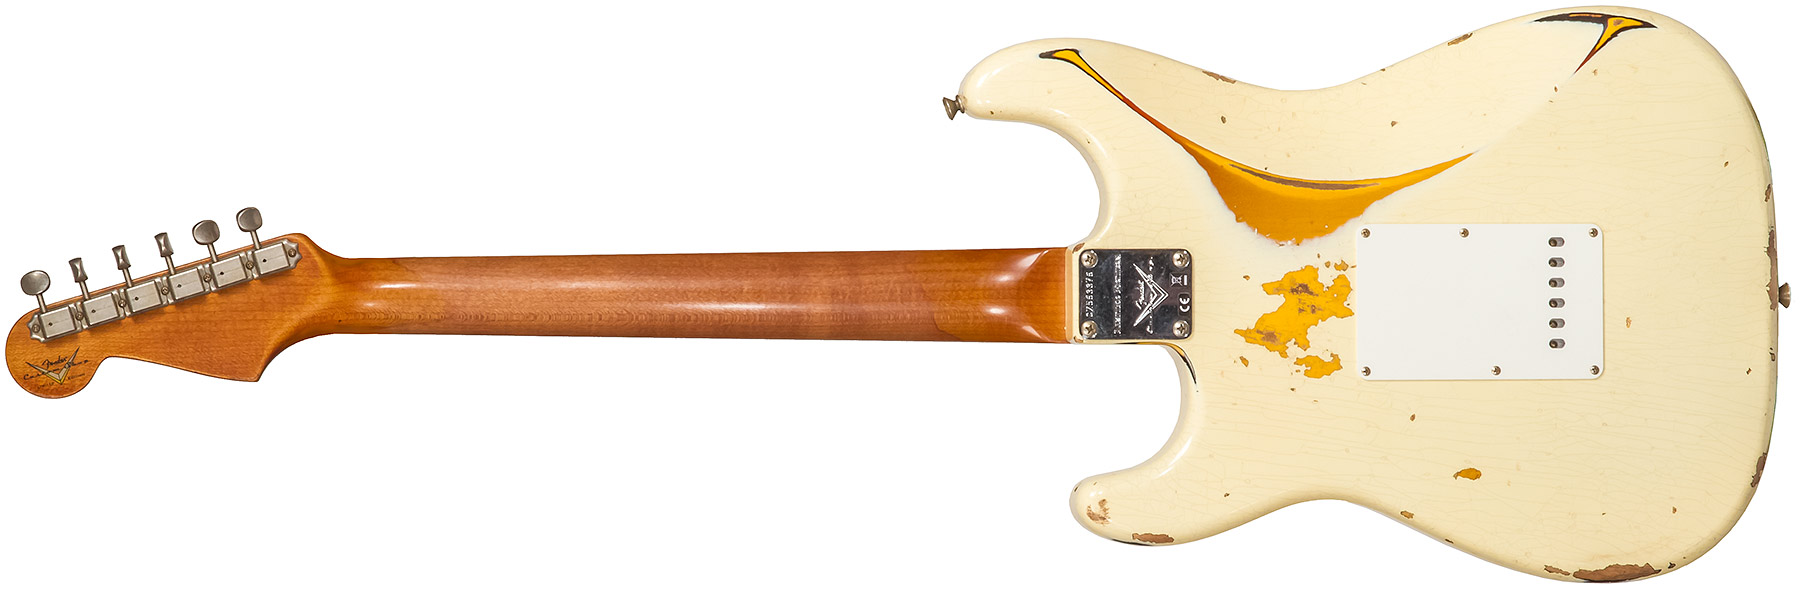 Fender Custom Shop Strat 1961 3s Trem Rw #cz563376 - Heavy Relic Vintage White/3-color Sunburst - Guitarra eléctrica con forma de str. - Variation 1